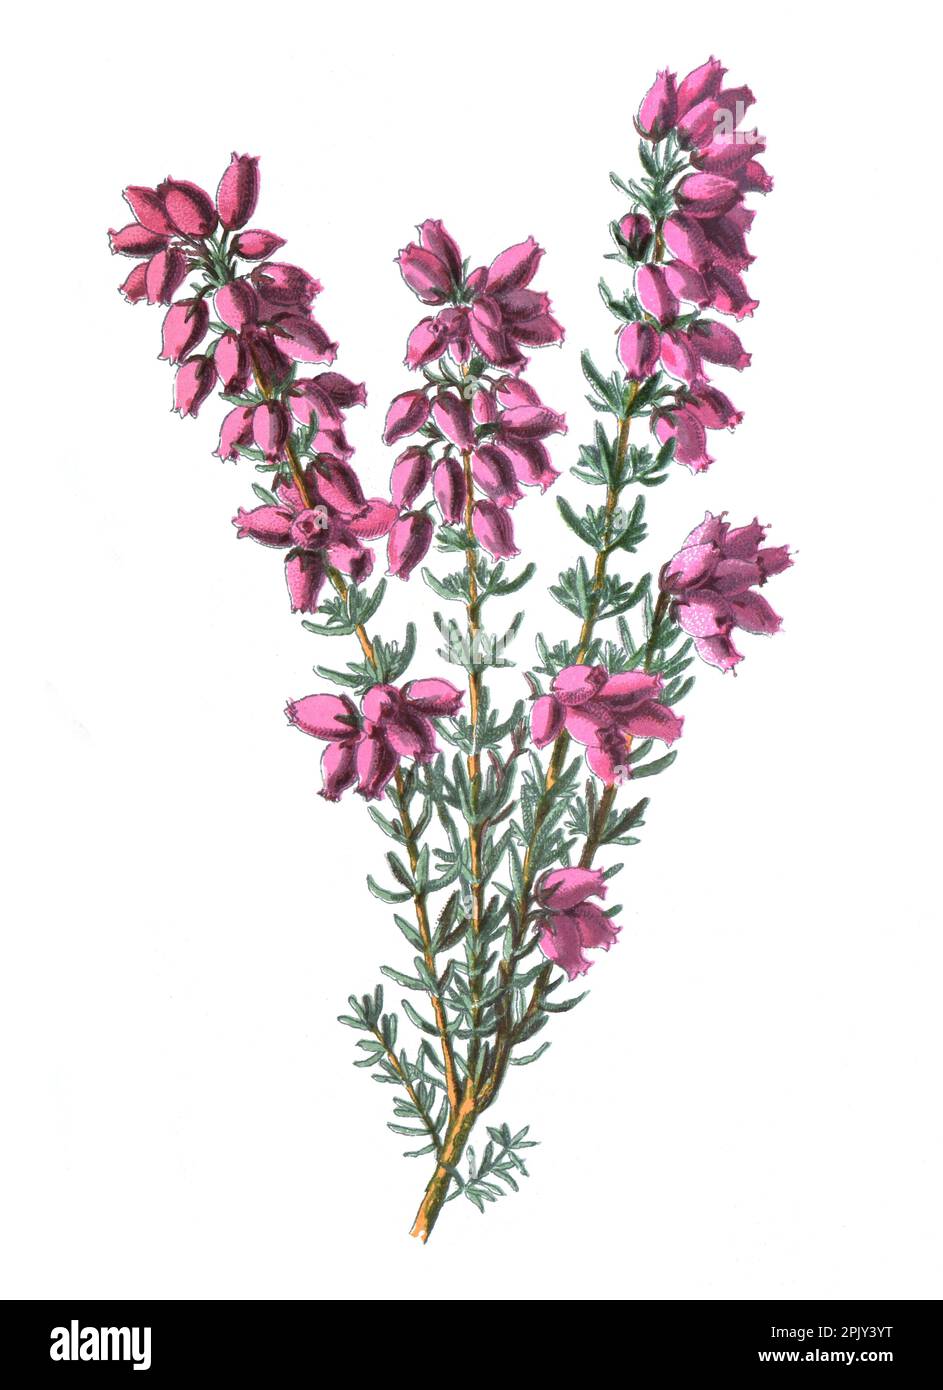 Purple Heather or bush heather flower. Antique hand drawn field flowers illustration.Vintage and antique flowers.wild flower illustration. Stock Photo